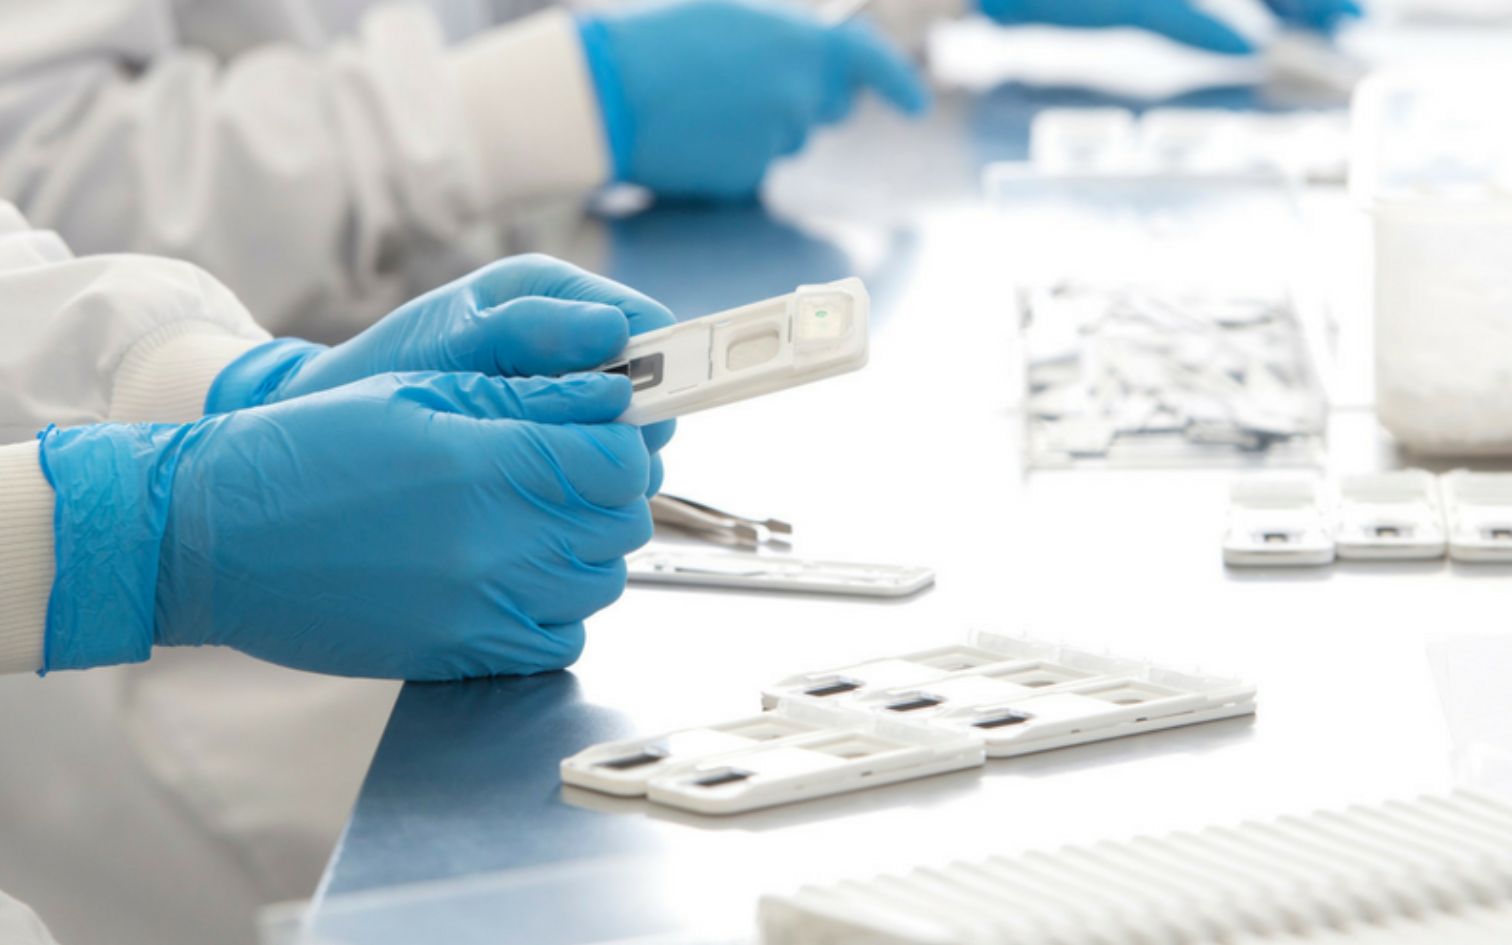 News and Media | Intelligent Bio Solutions to Add Ketamine and Tramadol to Fingerprint Drug Test